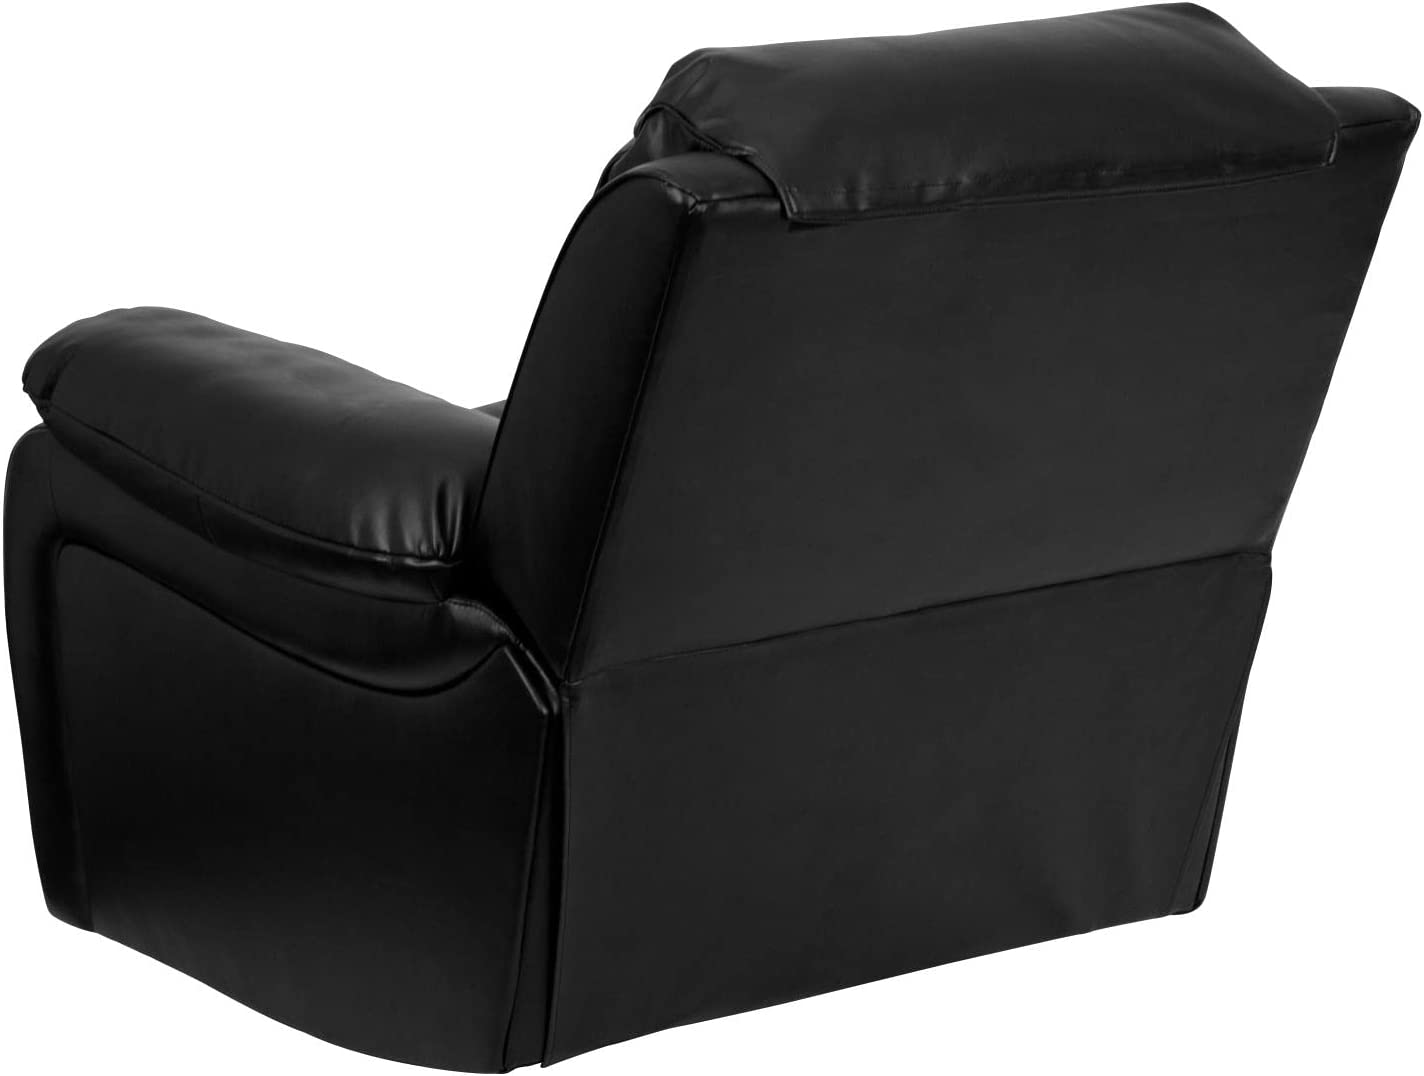 Flash Furniture Brown LeatherSoft Rocker Recliner